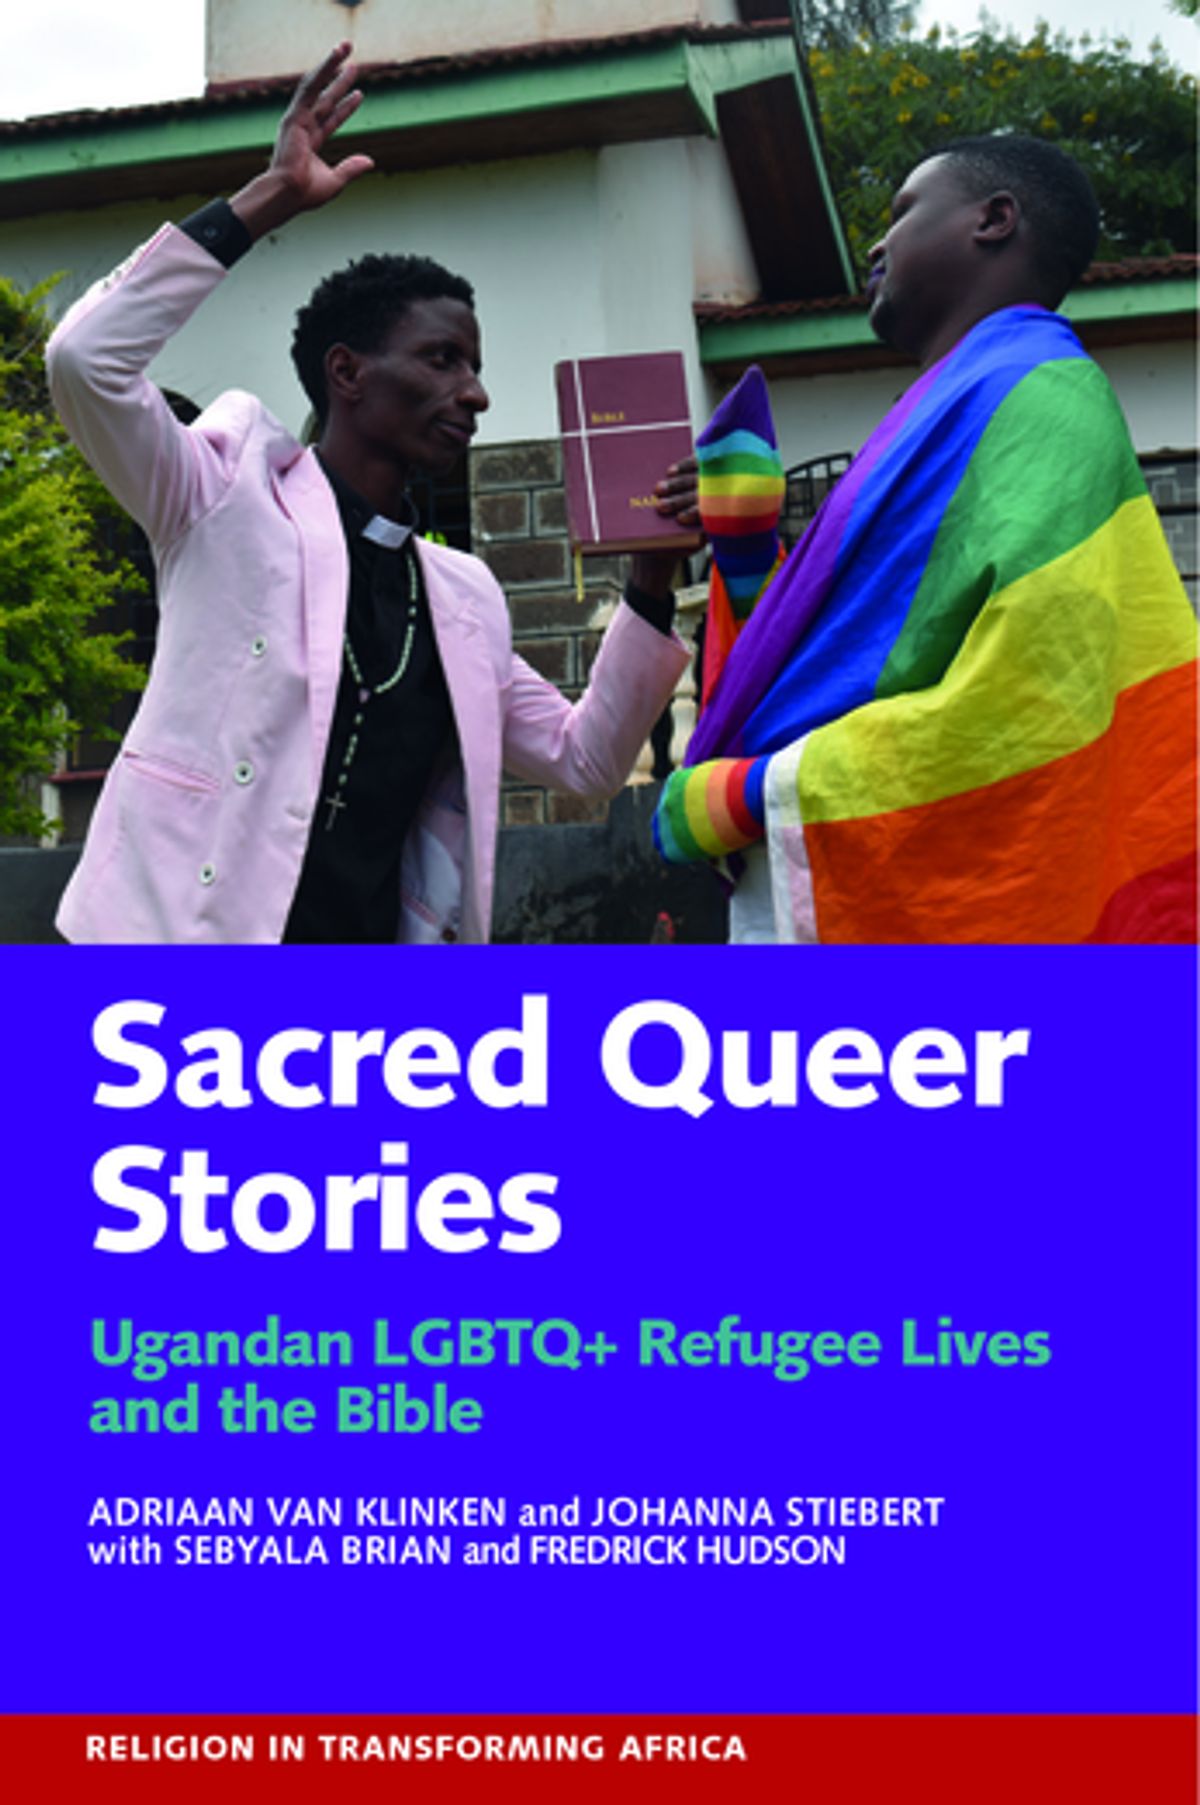 Q&A with Johanna Stiebert and Adriaan van Klinken about their new book, Sacred Queer Stories.